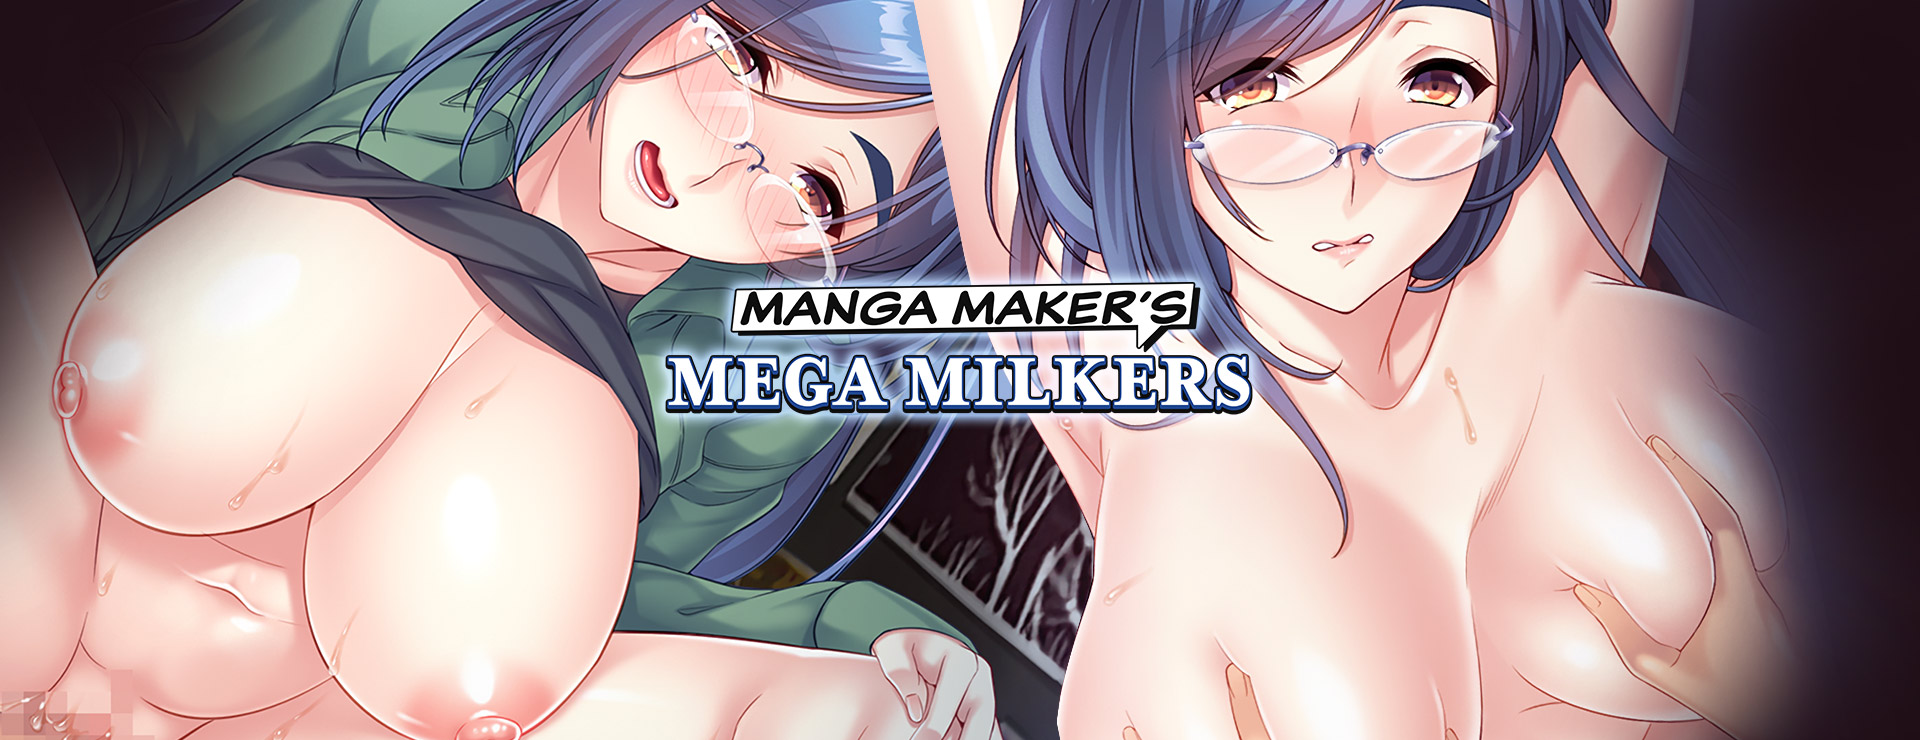 Manga Maker's Mega Milkers - ビジュアルノベル ゲーム